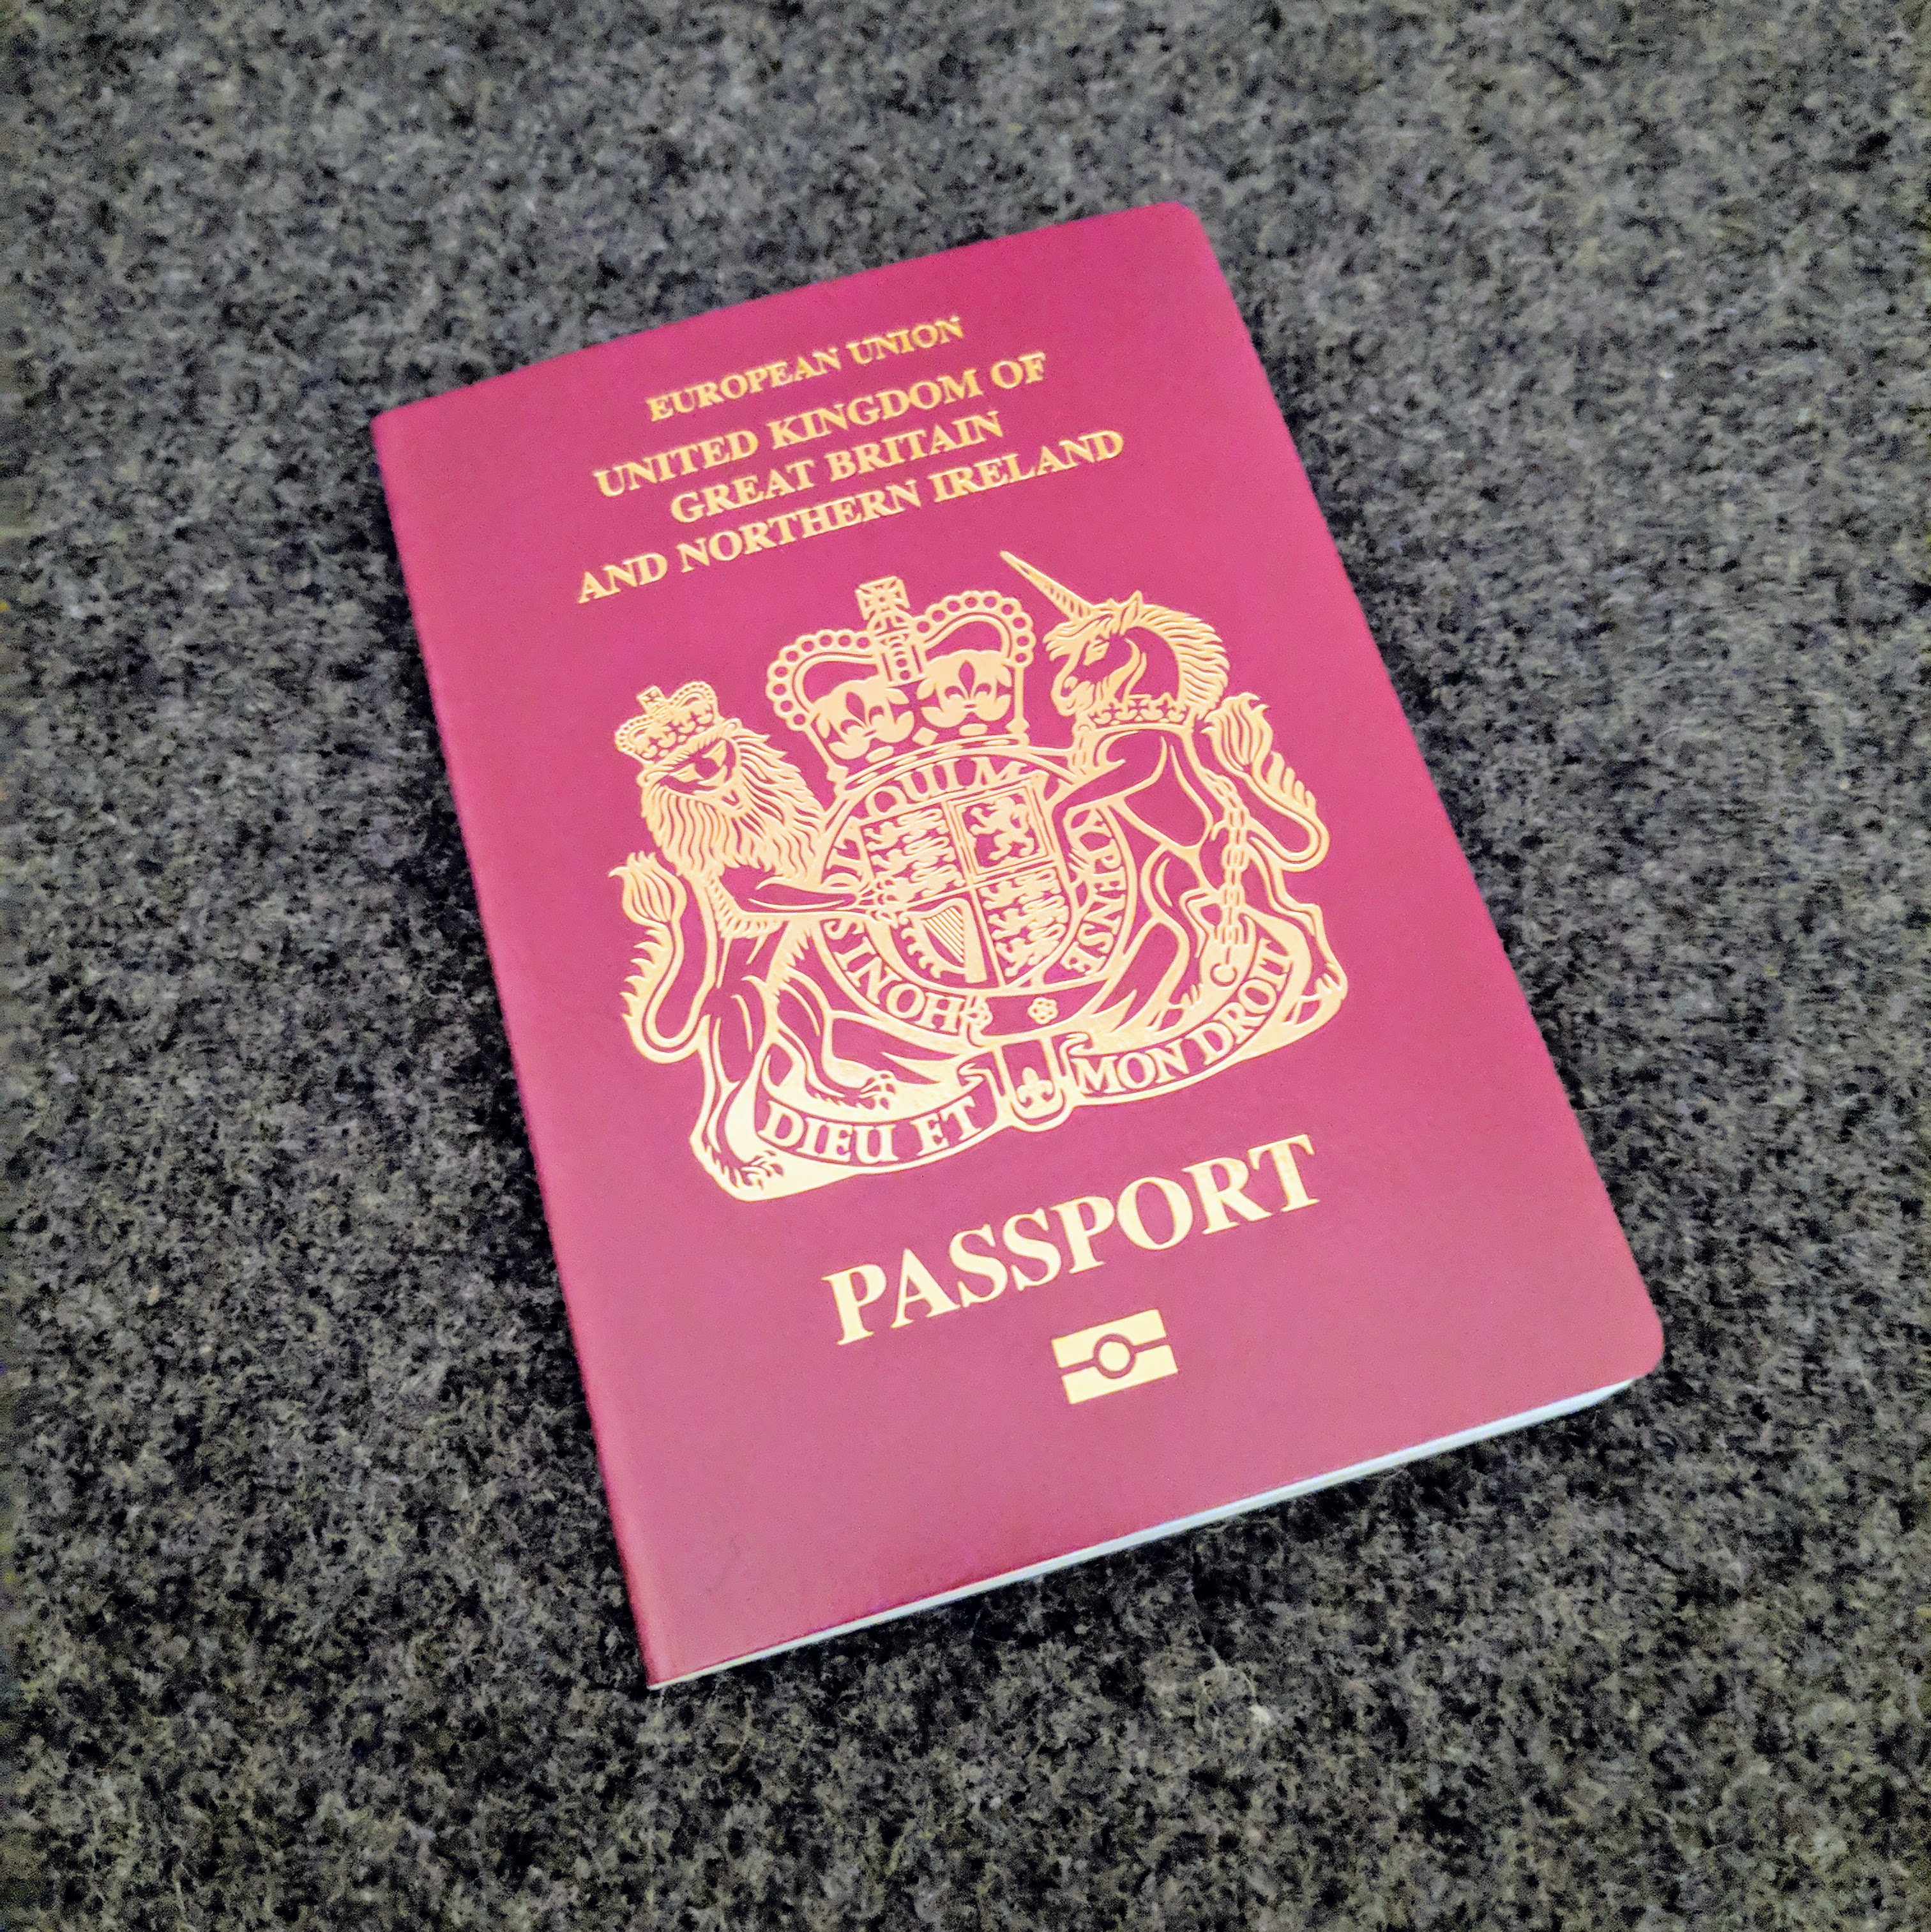 Burgundy European Union passport